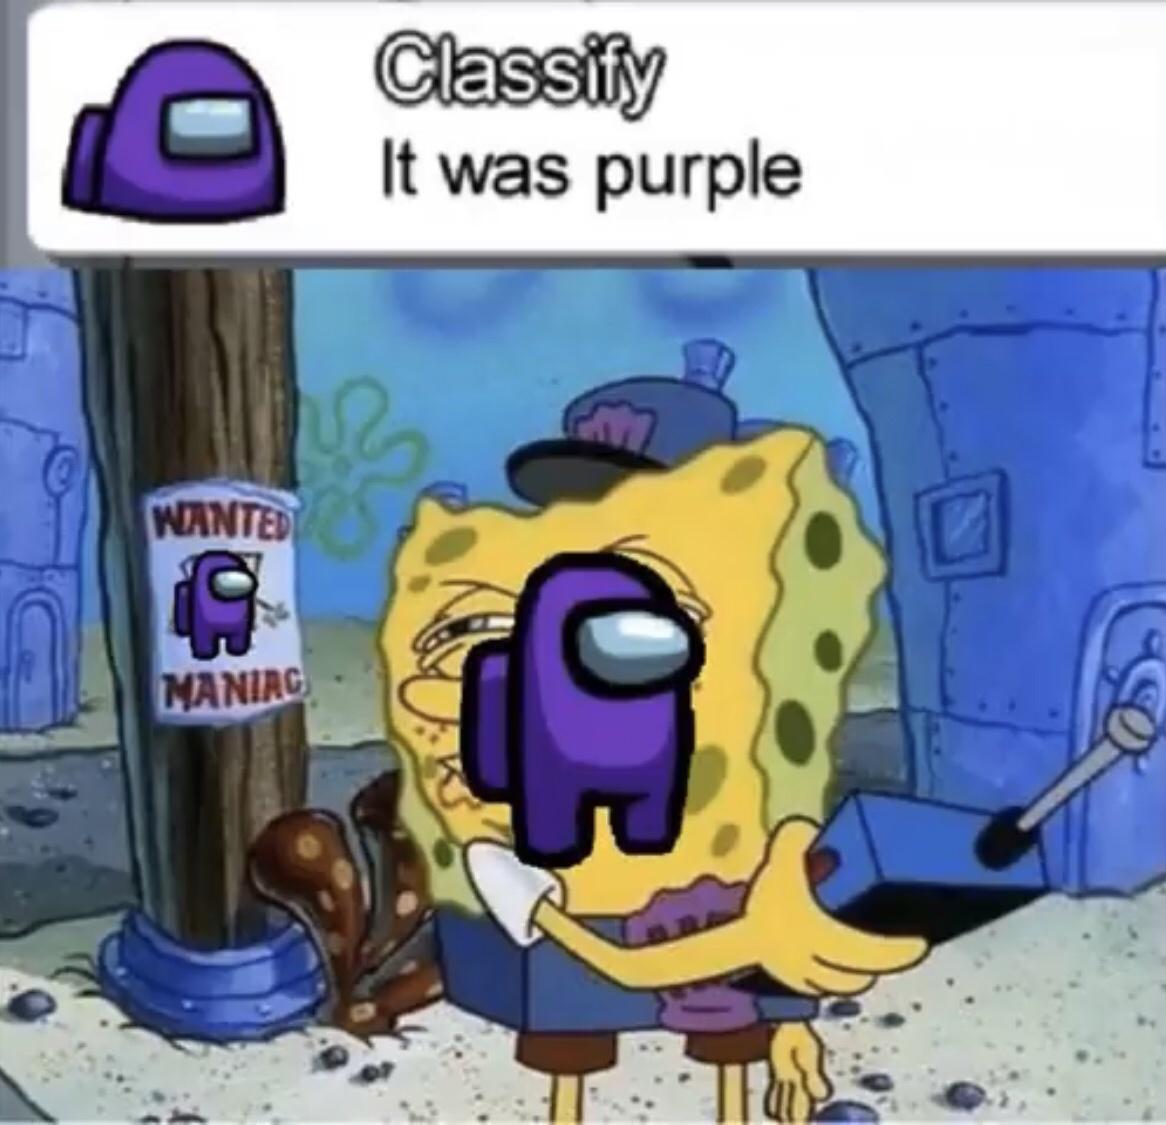 dank memes 2021 - Classify It was purple Wanted o Maniac